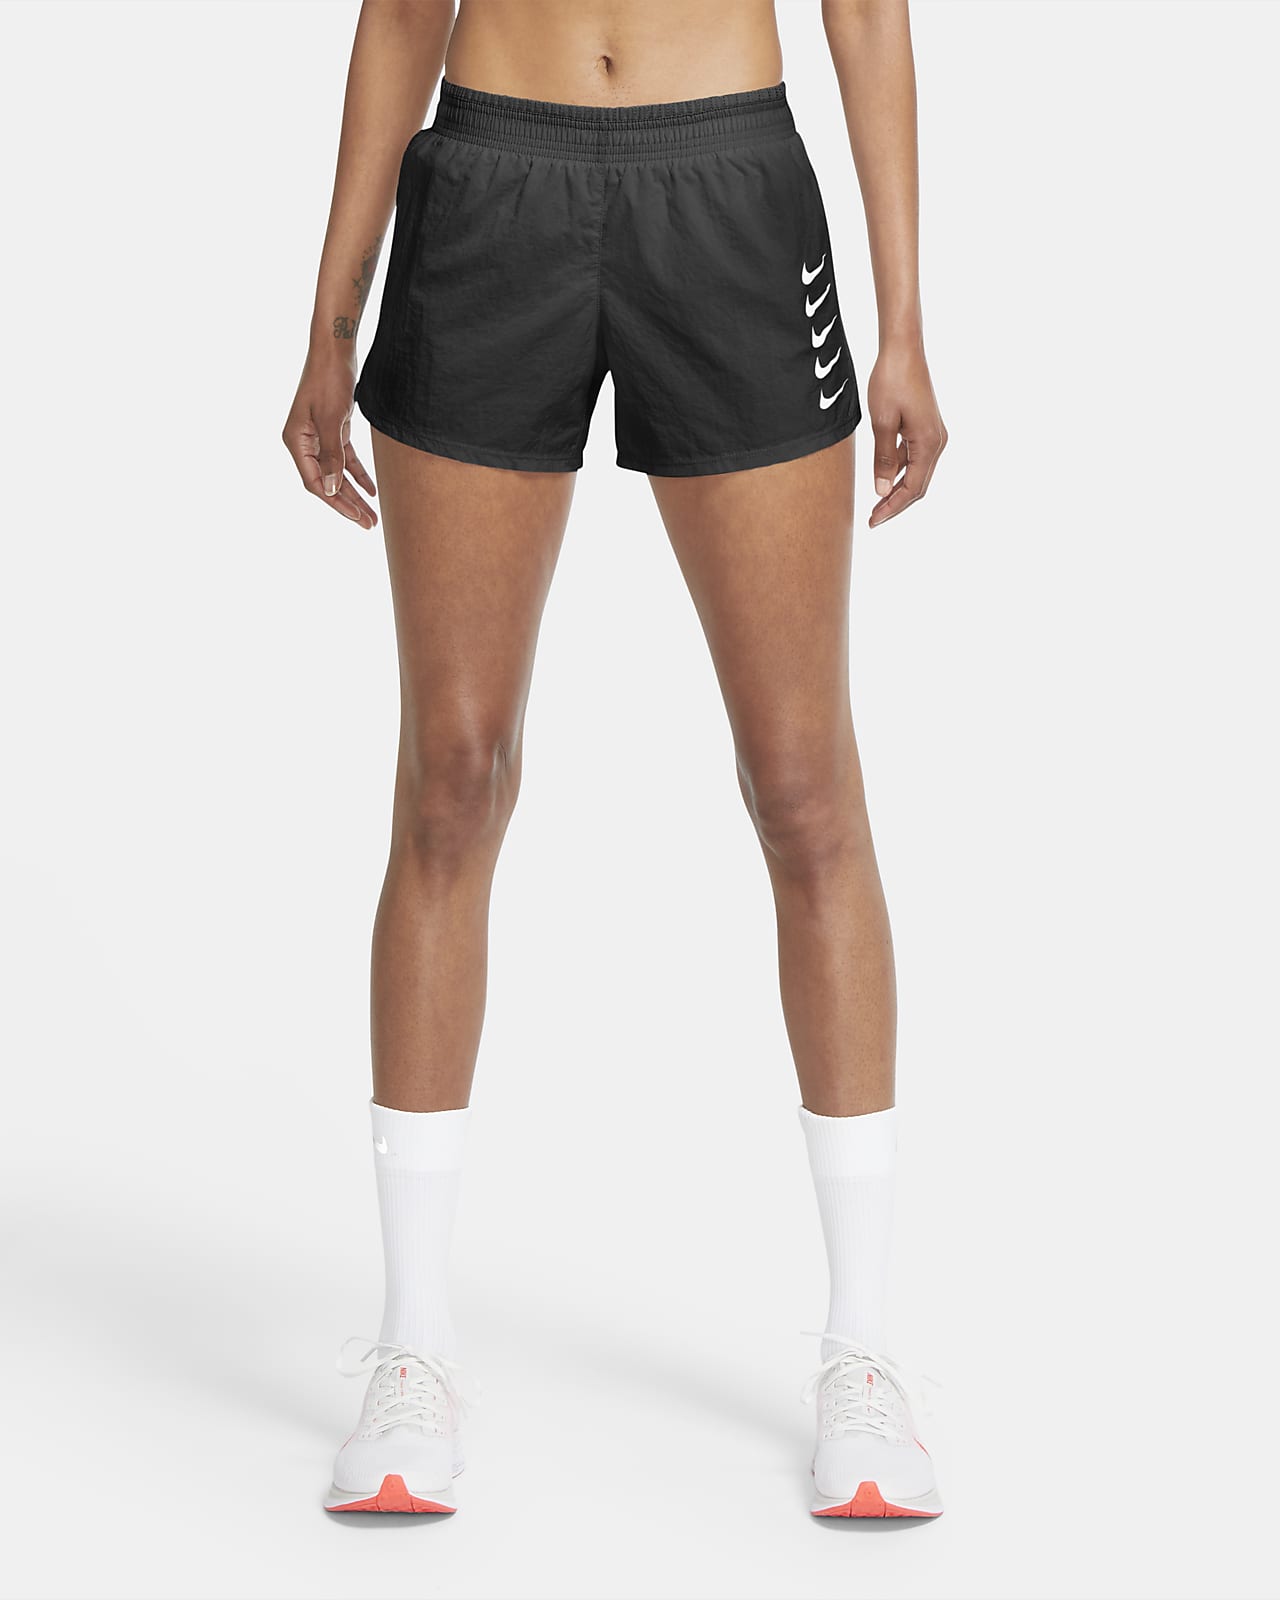 nike women's running shorts